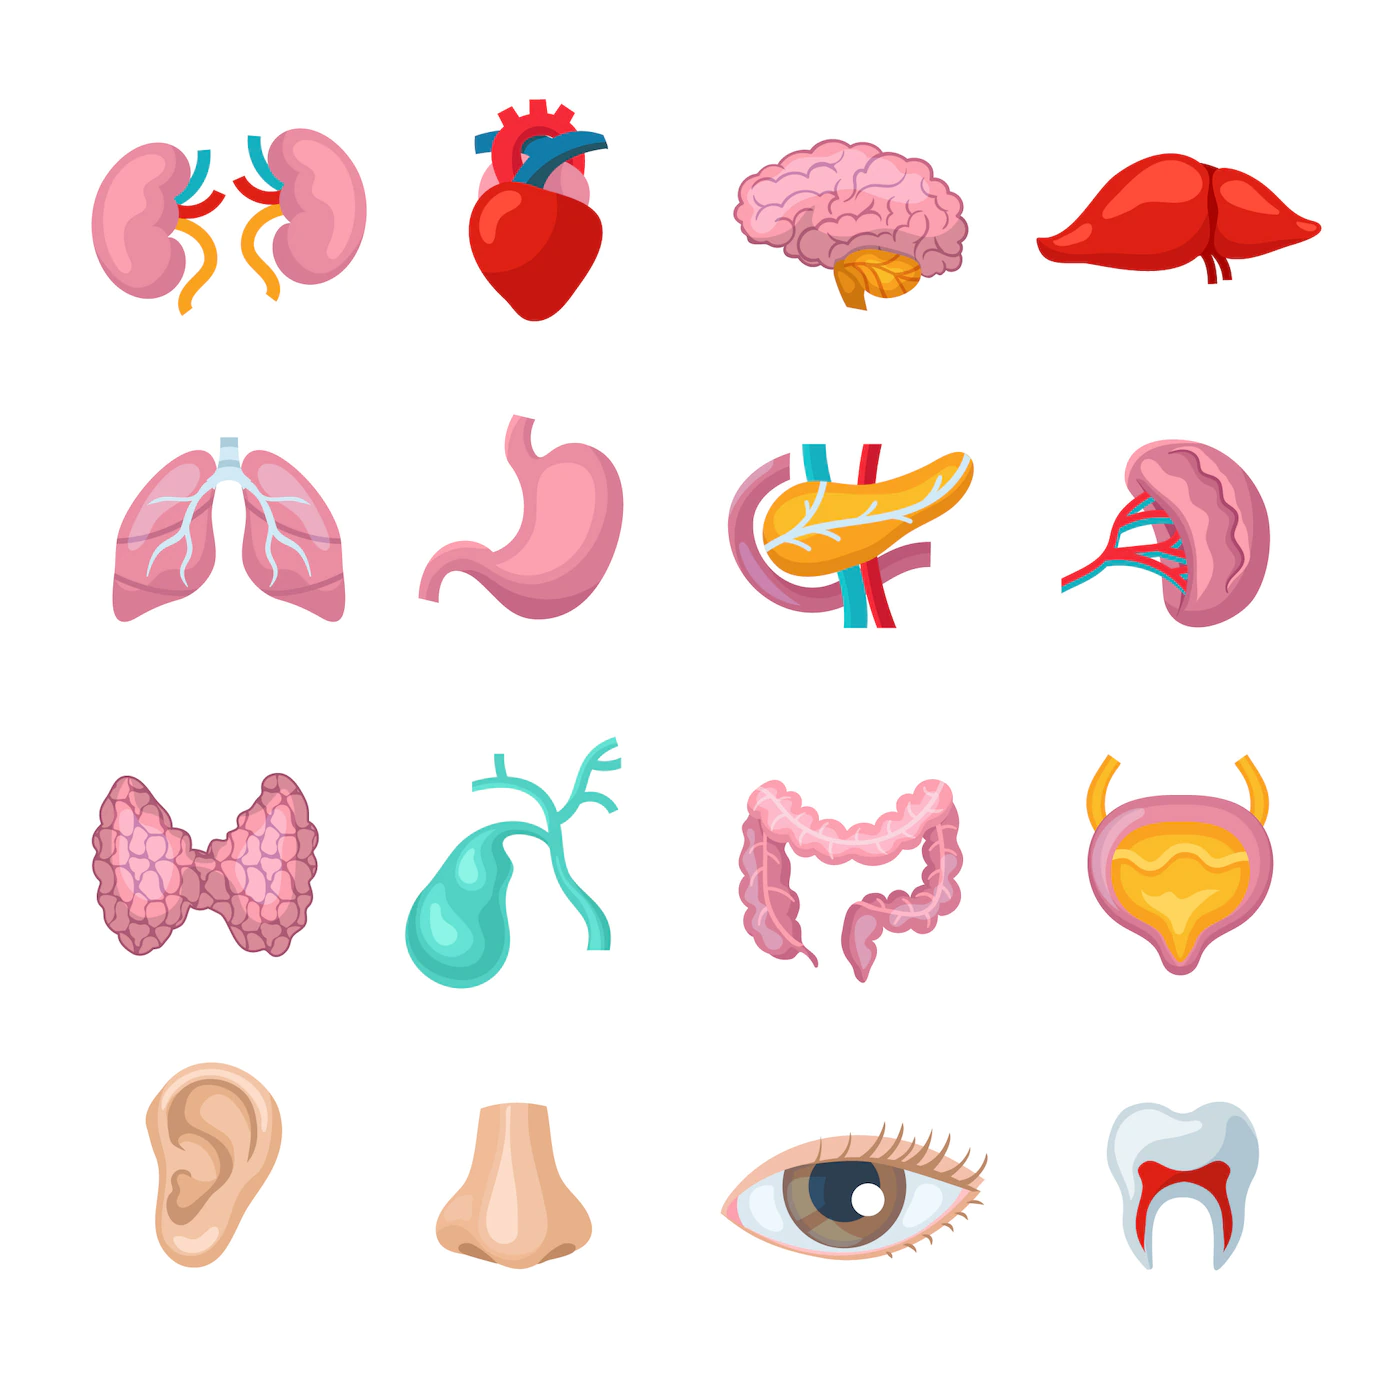 Human Organs Flat Icons Set 1284 11522